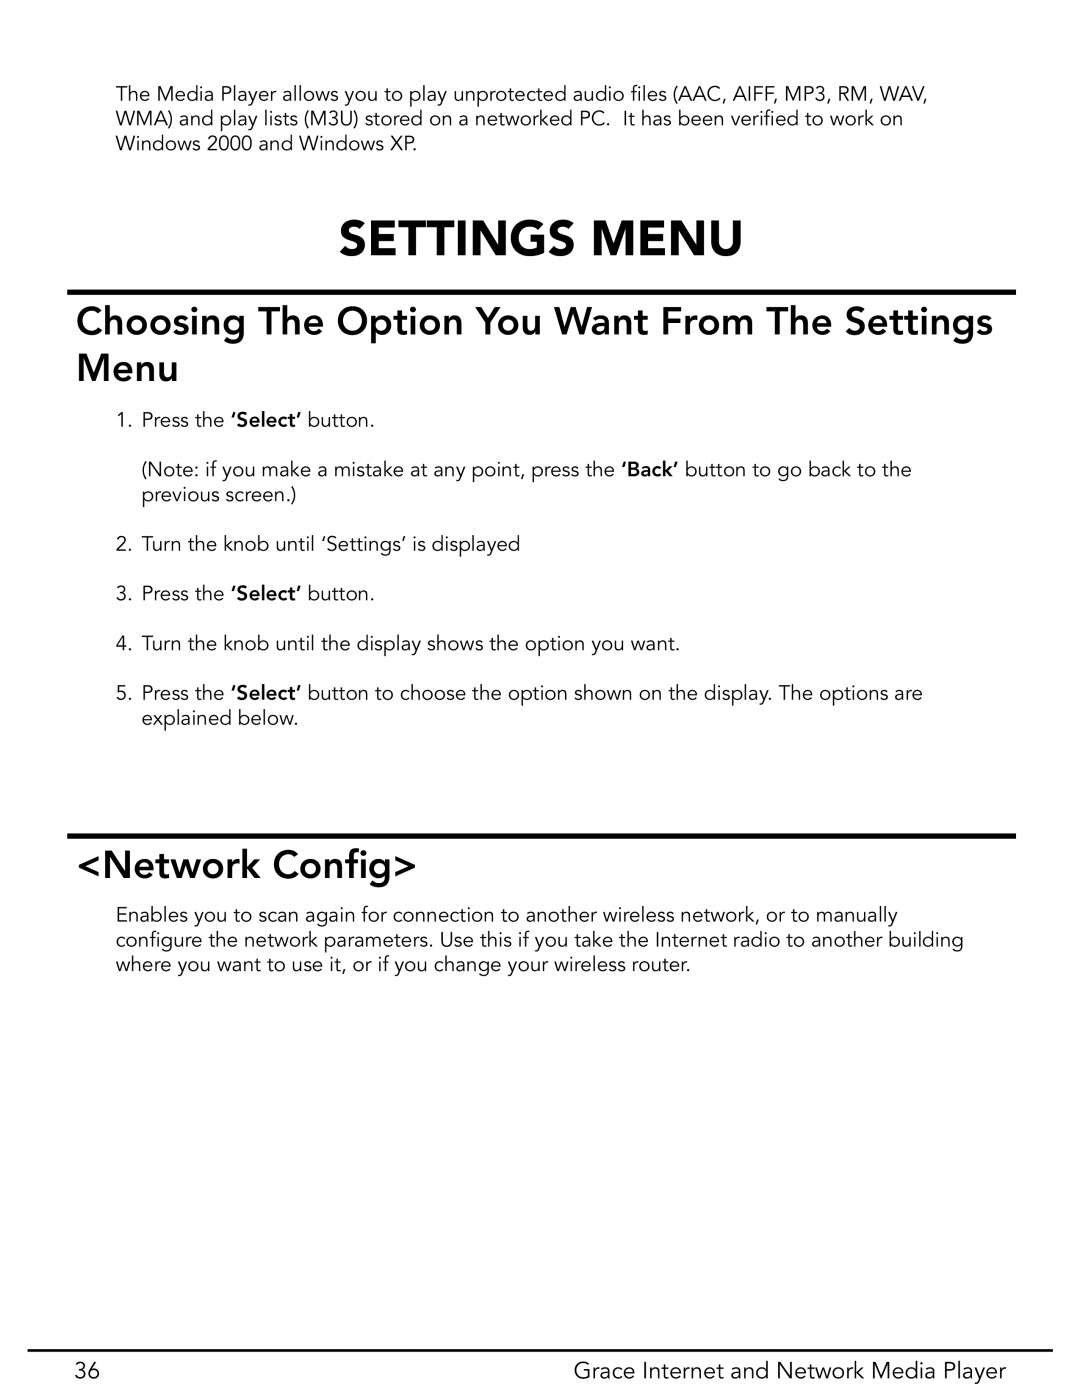 Grace GDI-IR3020 manual Settings Menu, Network Conﬁg, Grace Internet and Network Media Player 